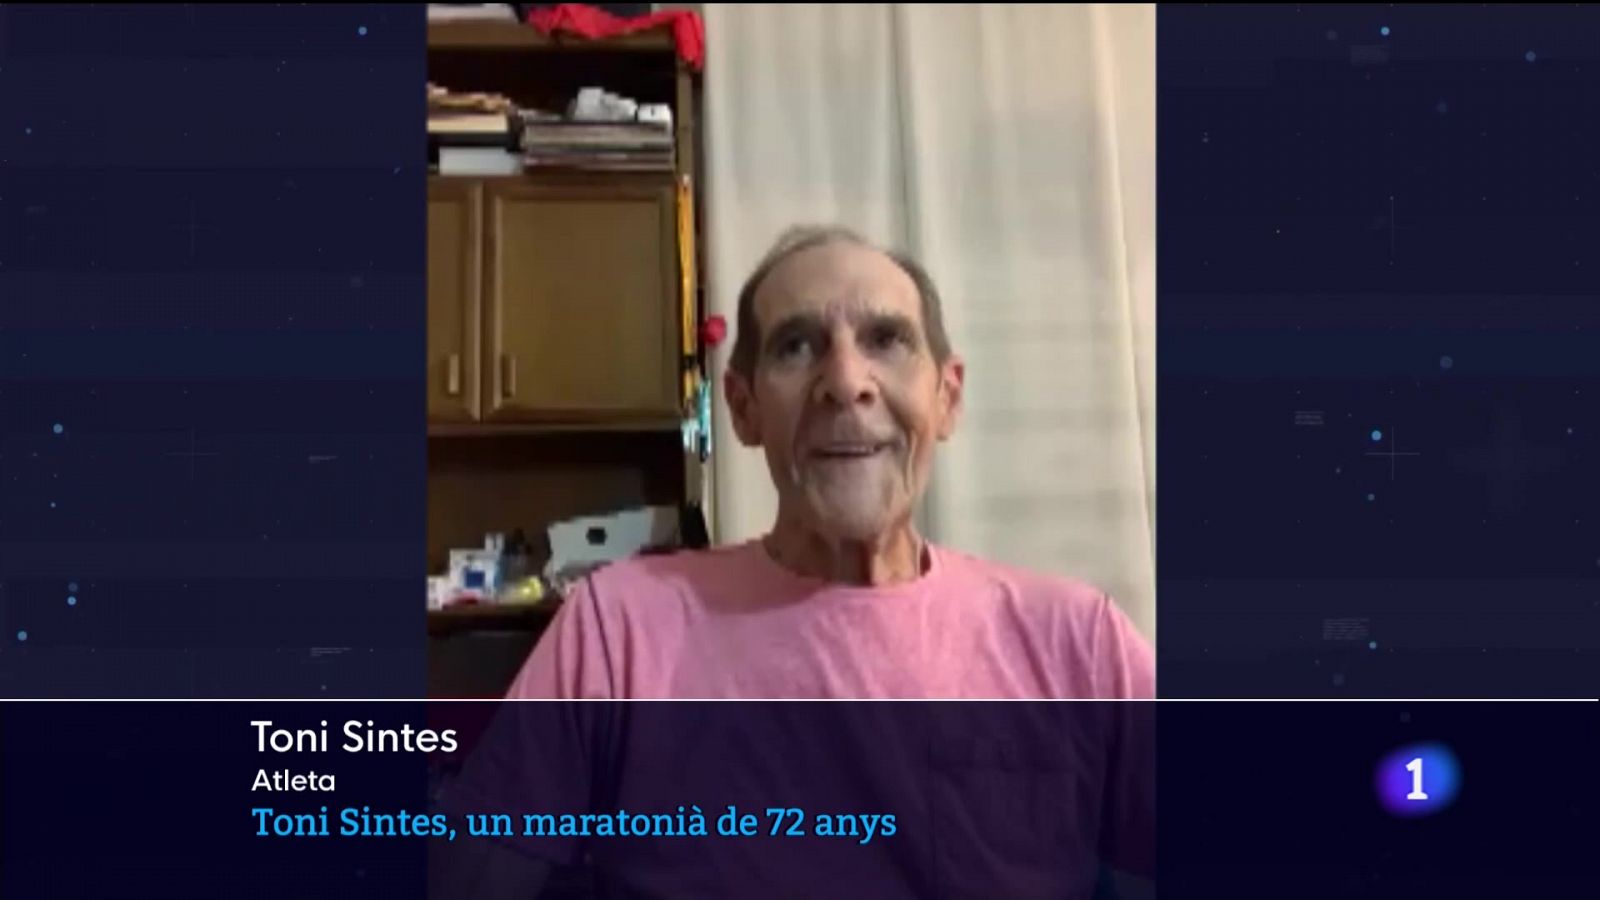 Informatiu Balear: Toni Sintes, un maratonià de 72 anys | RTVE Play